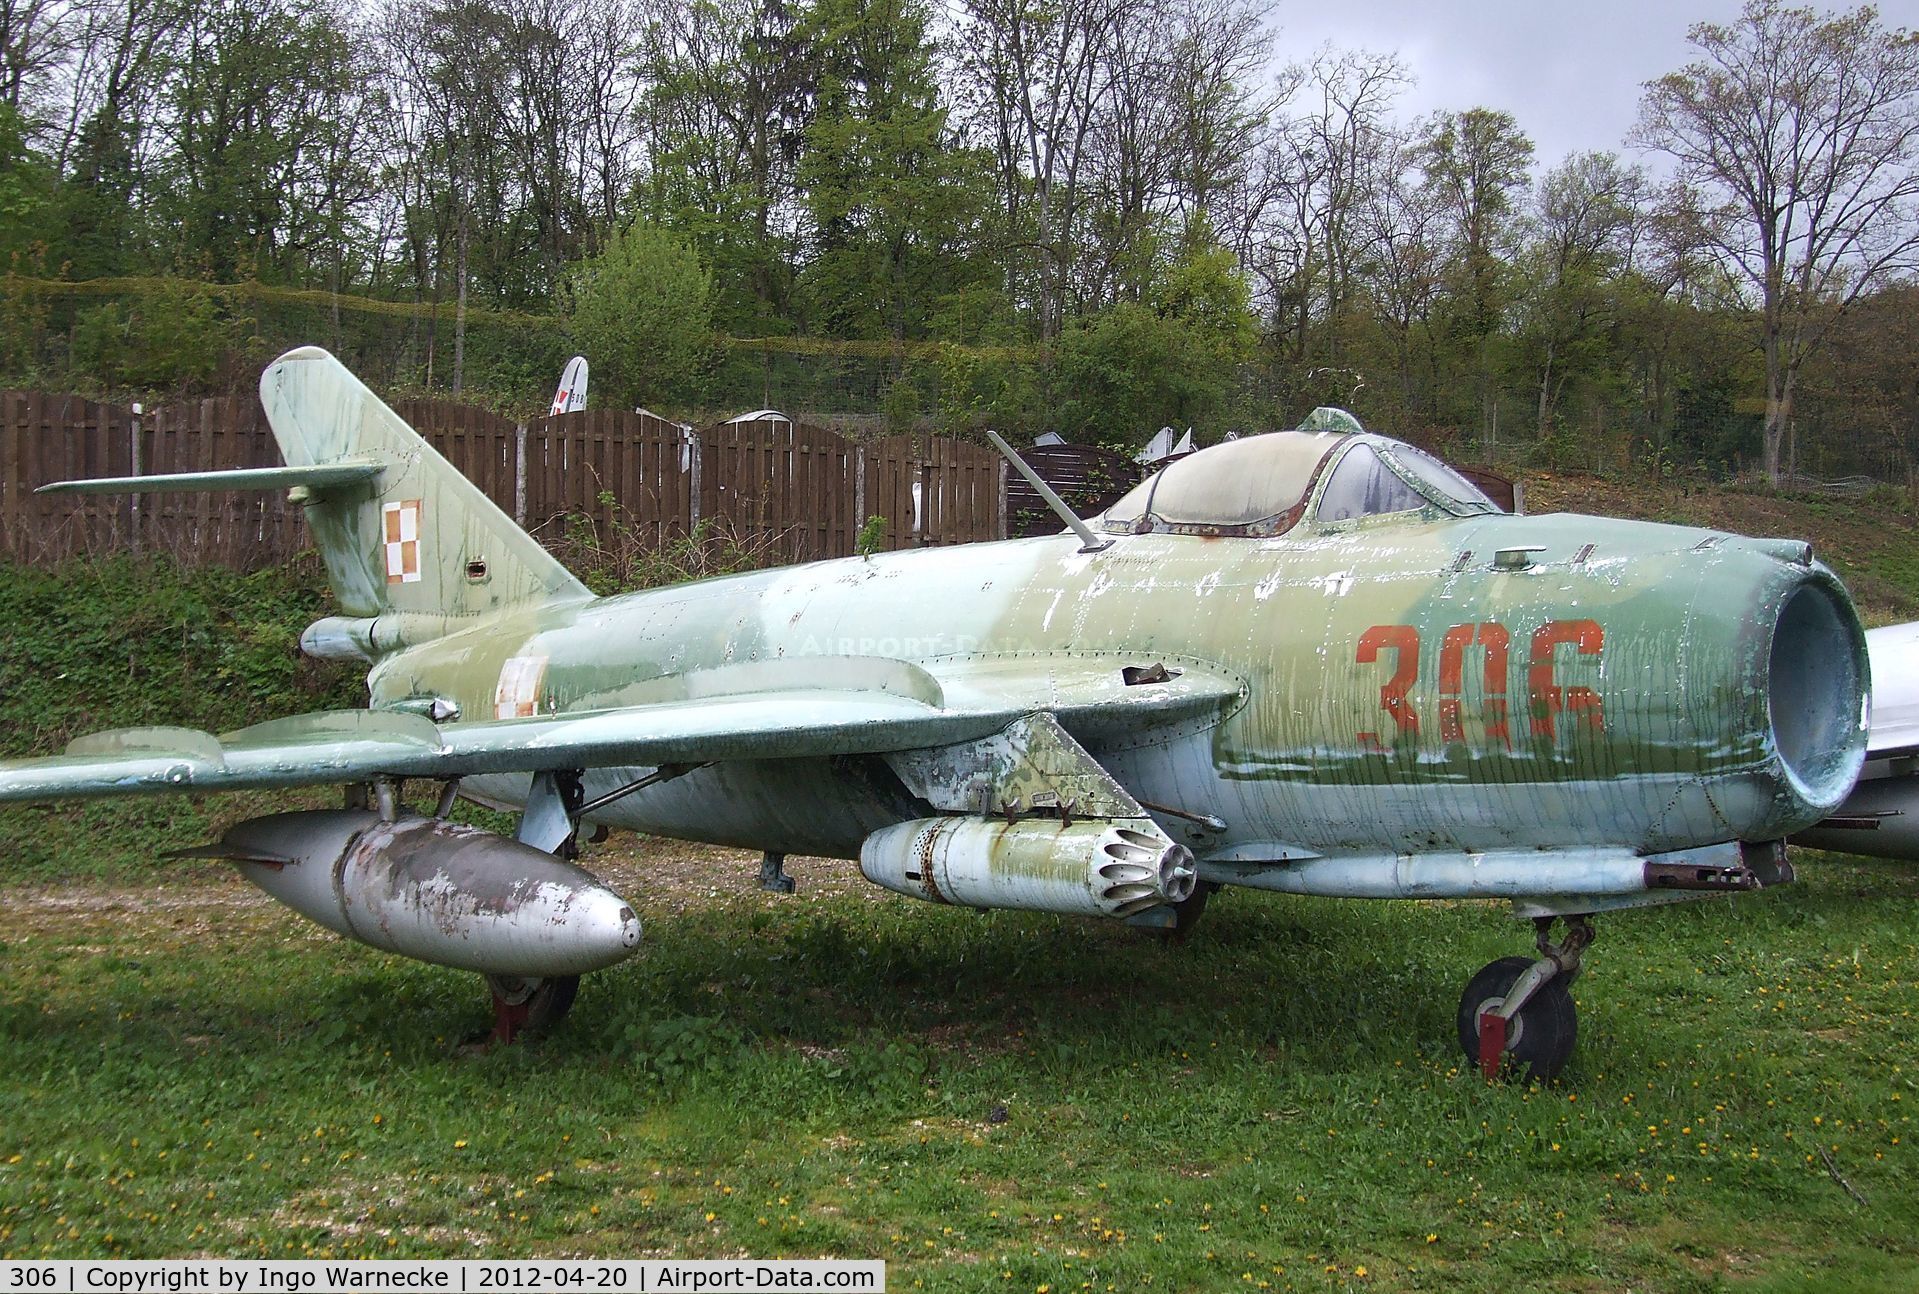 306, PZL-Mielec Lim-6bis C/N 1F-0306, PZL-Mielec Lim-6bis (MiG-17 attack version) FRESCO at the Musee de l'Aviation du Chateau, Savigny-les-Beaune